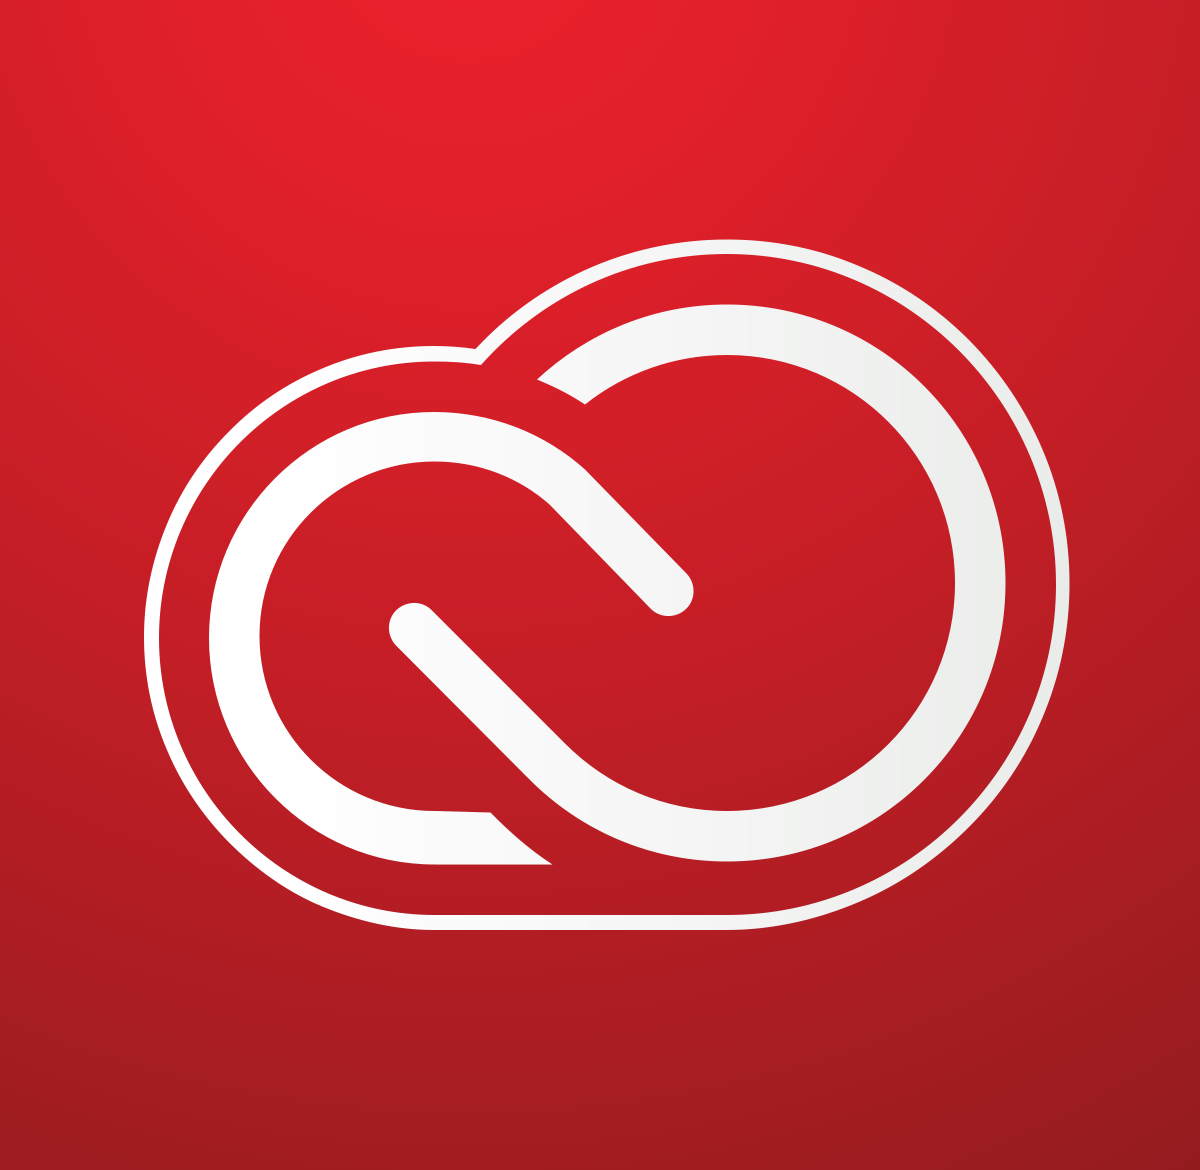 Image logo for Adobe Creative Cloud.